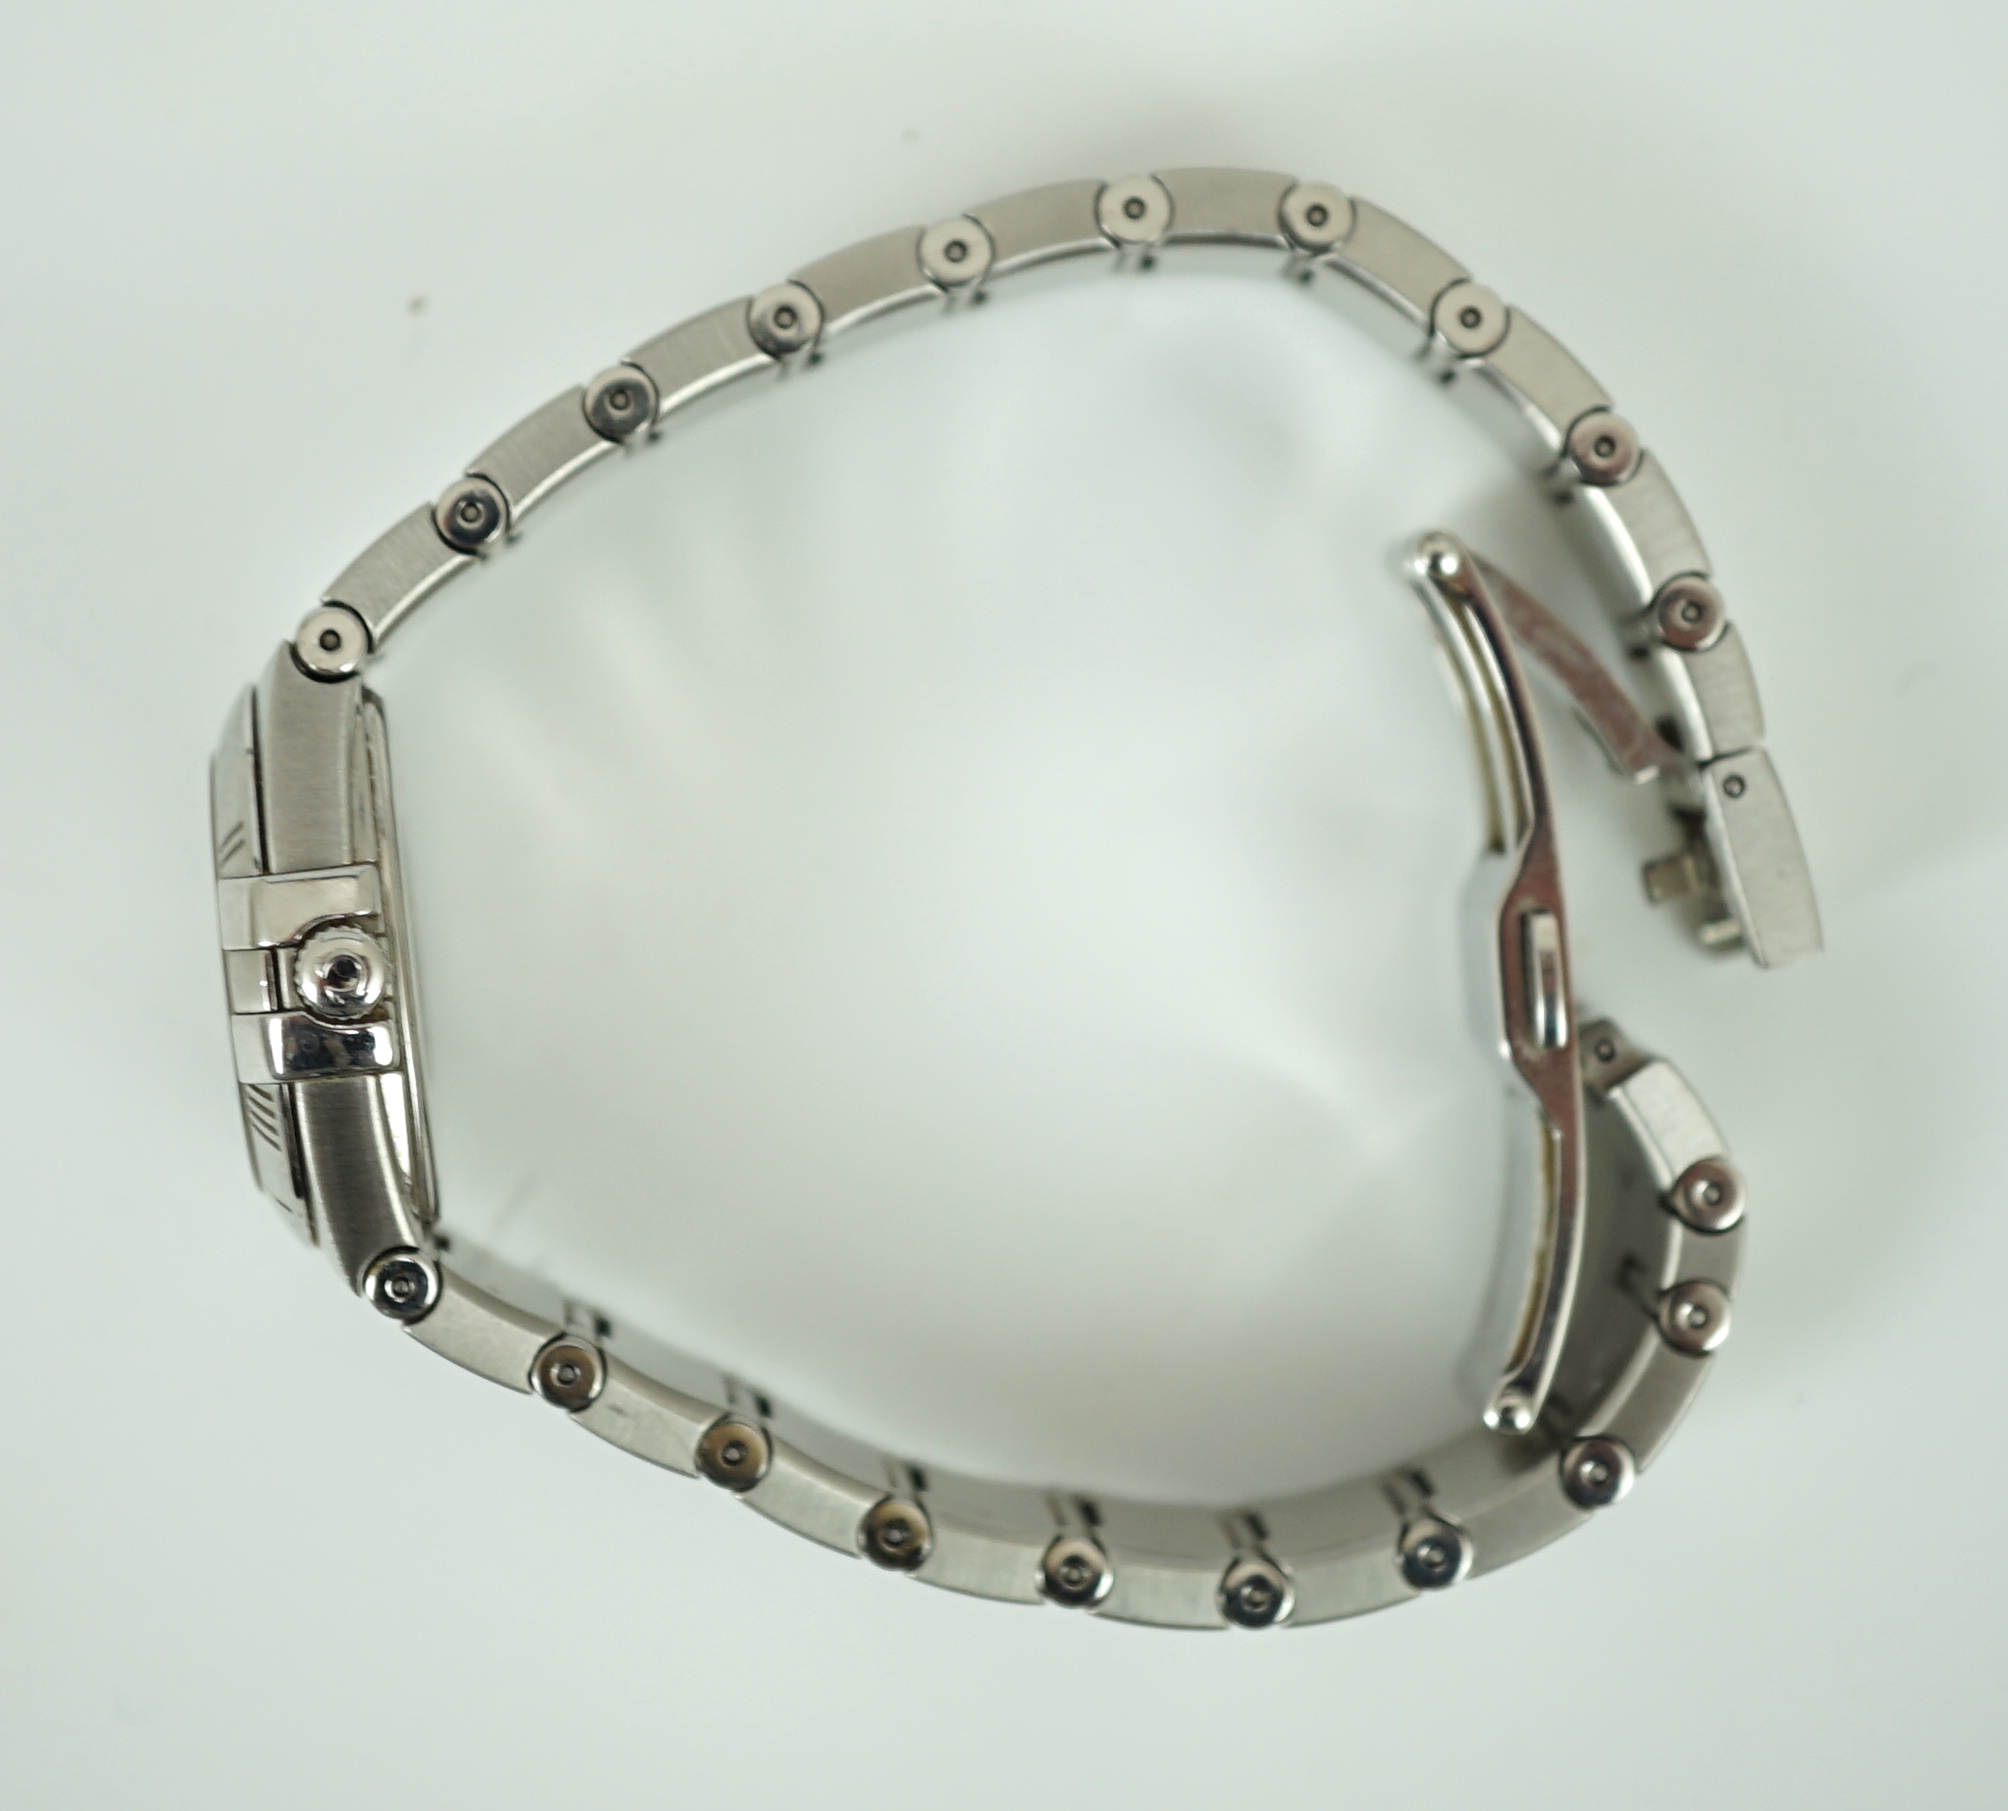 A lady's modern stainless steel Omega Constellation quartz wrist watch